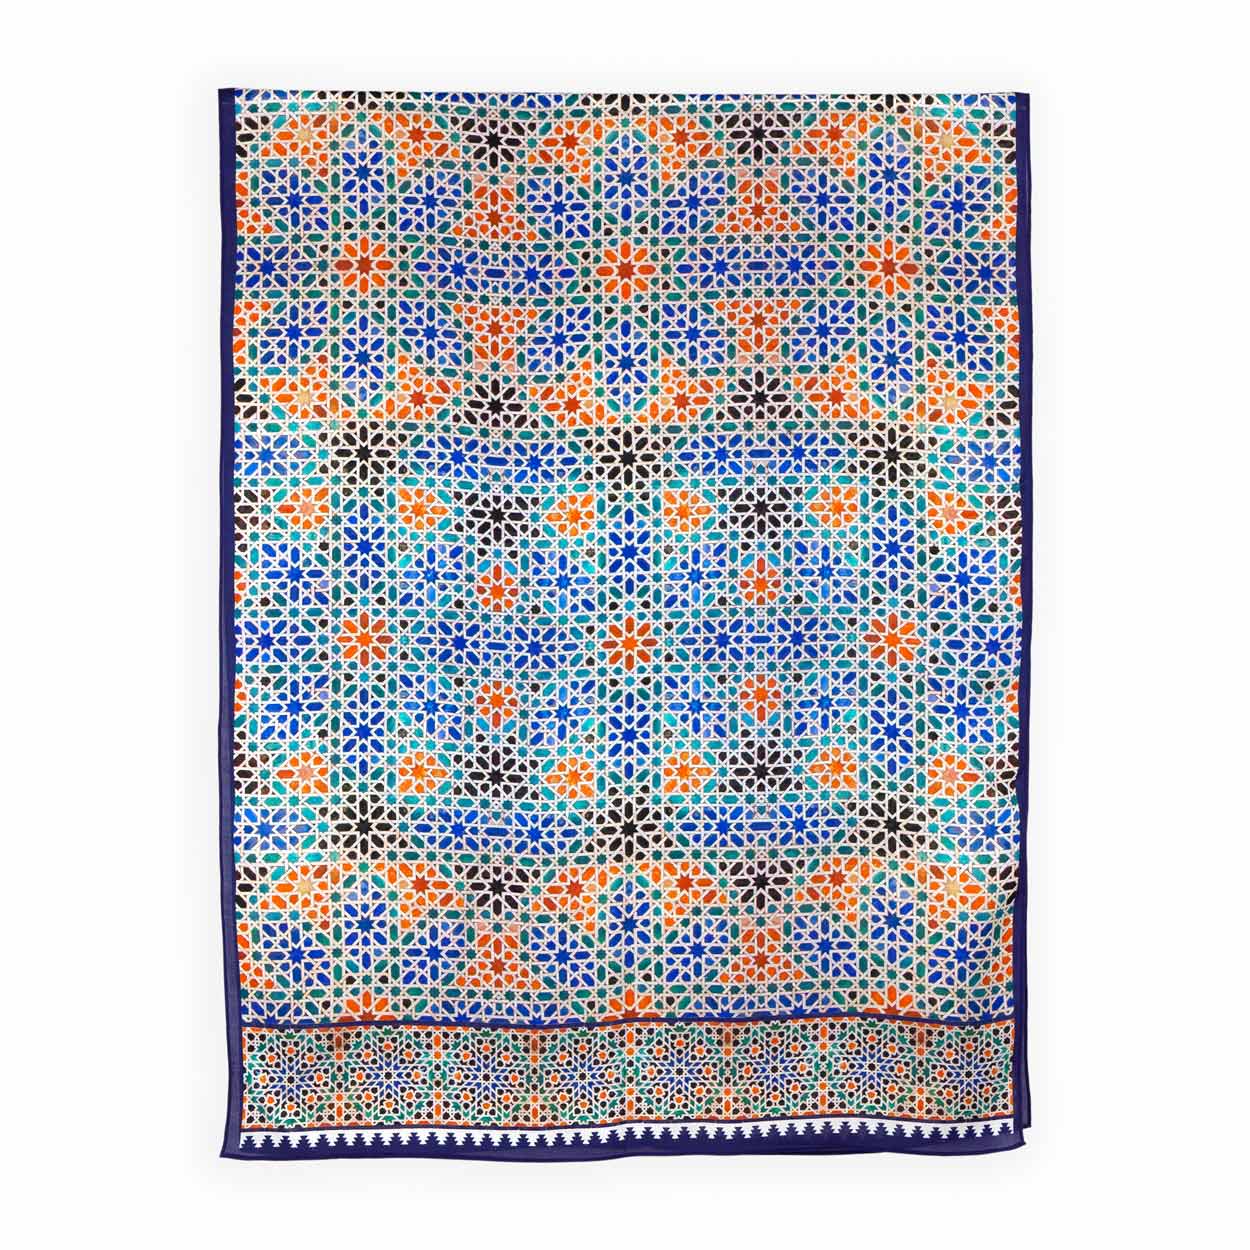 Large shawl for men and women featuring Moorish tile print